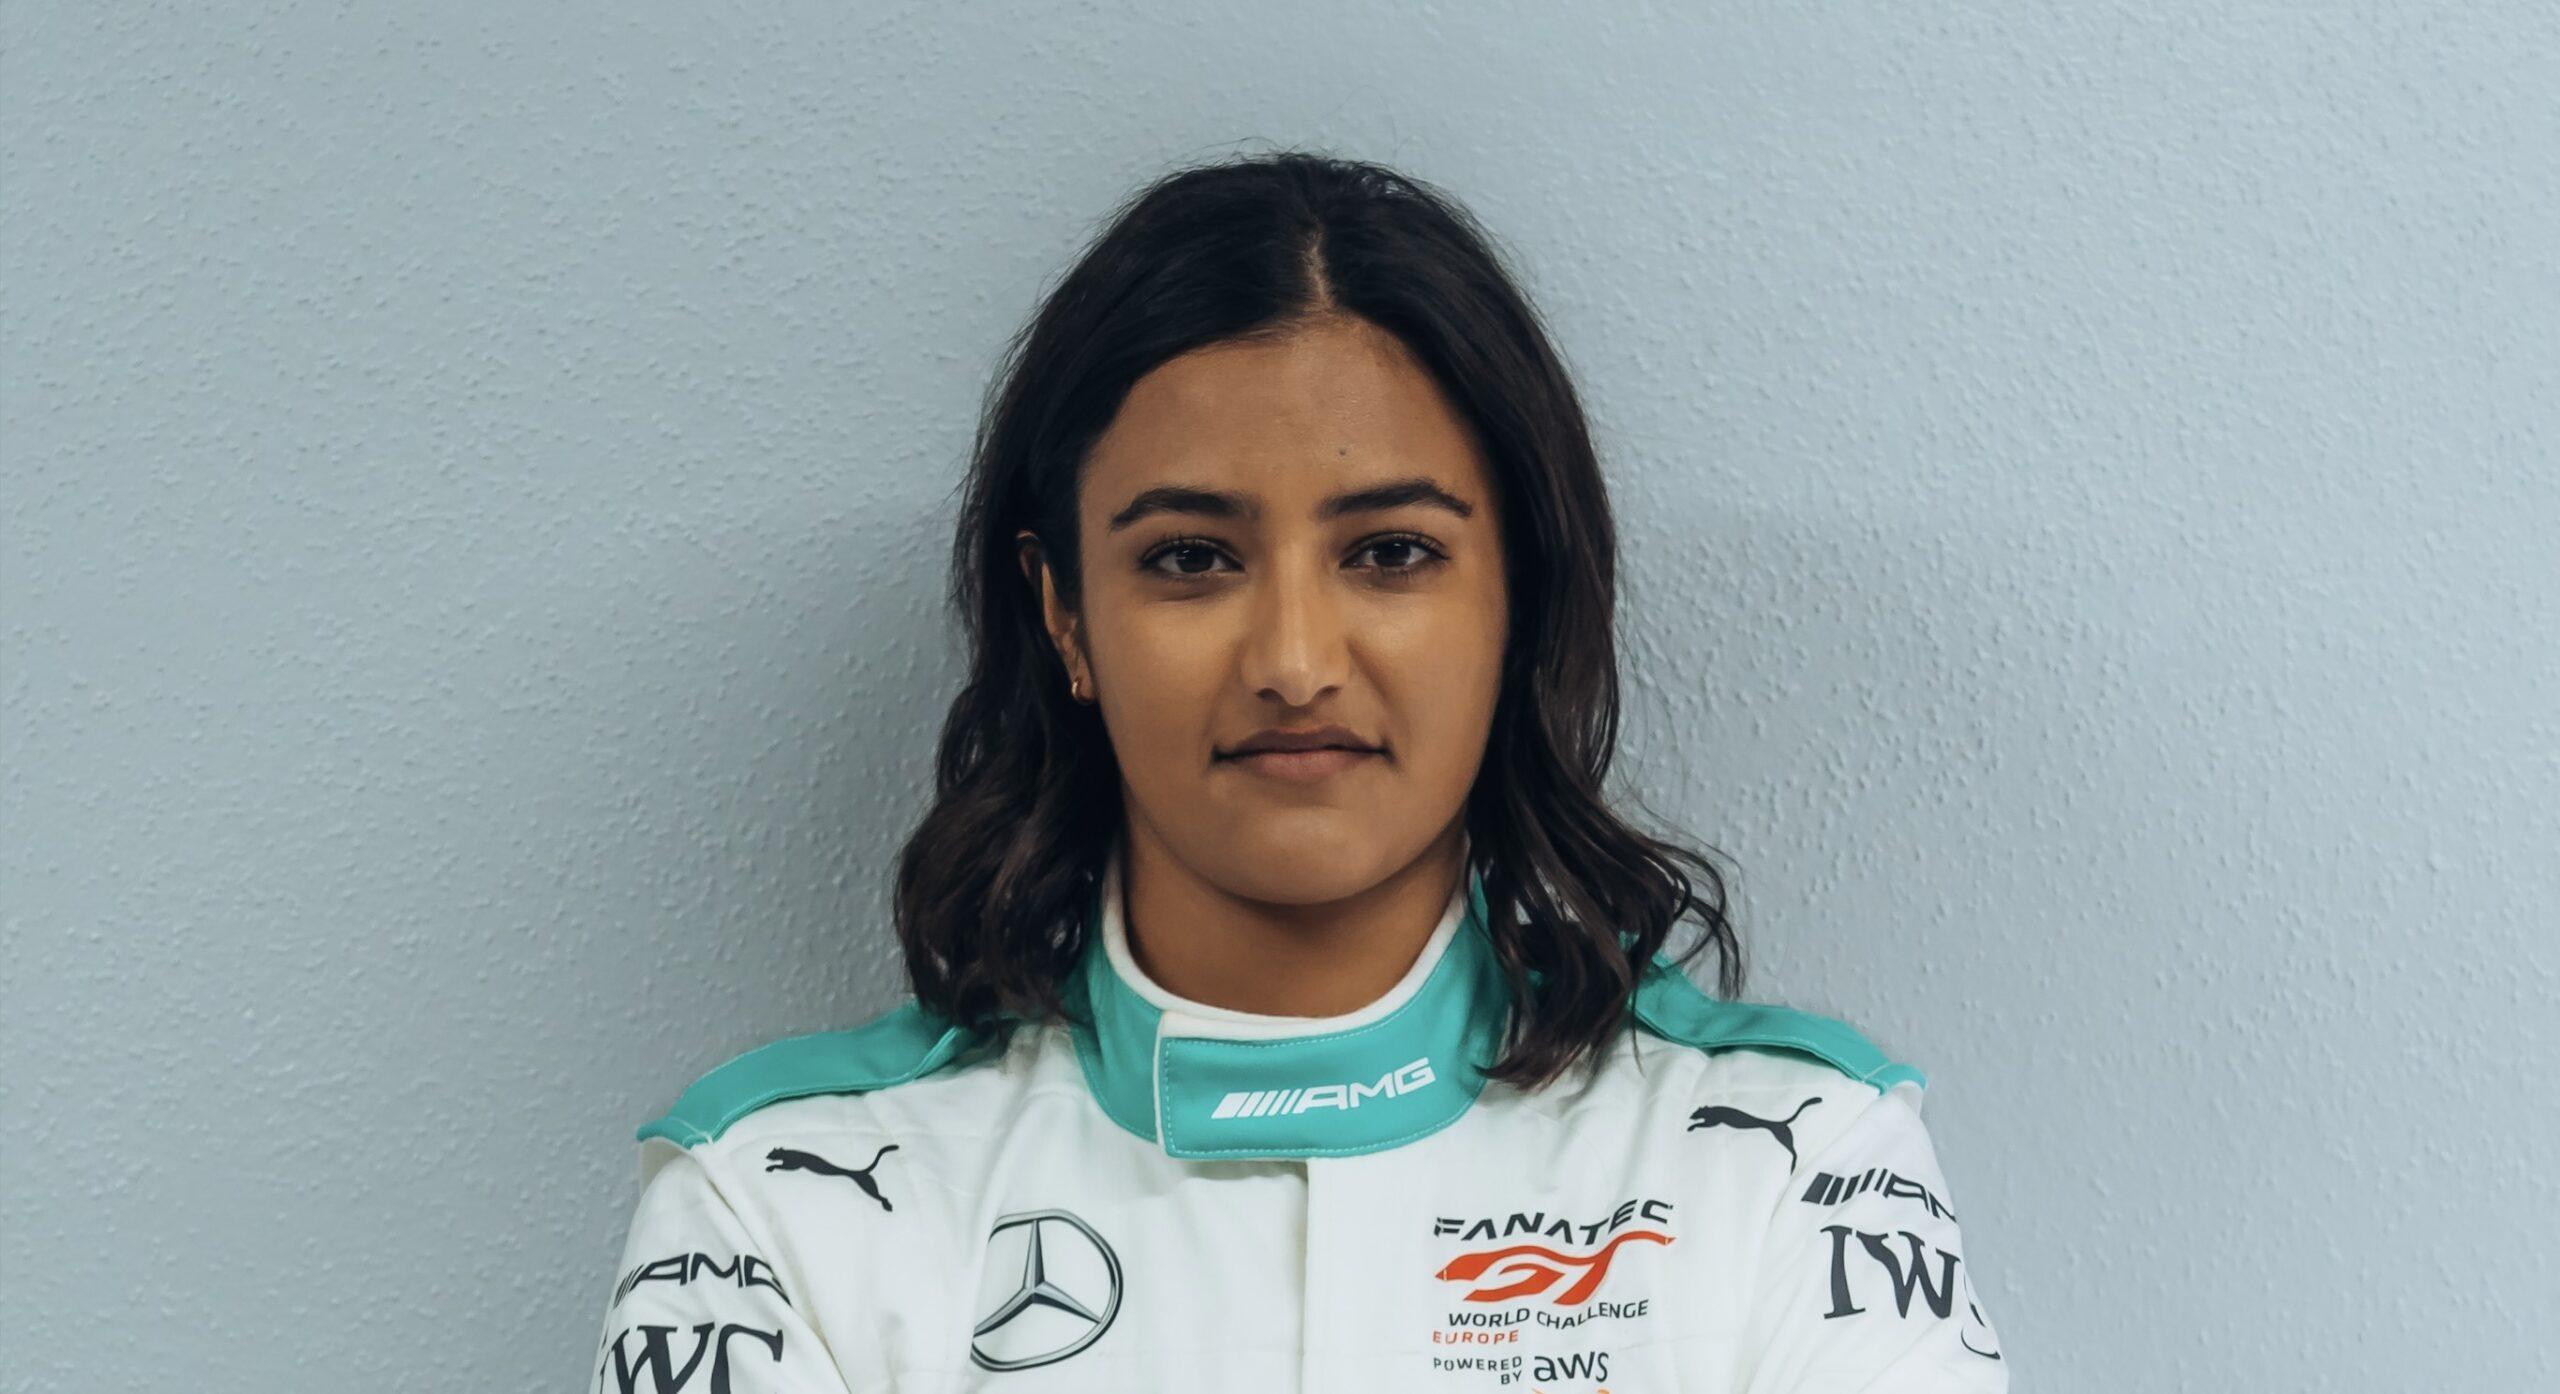 Reema Juffali on IWD: The race car star on making motorsports inclusive for women 